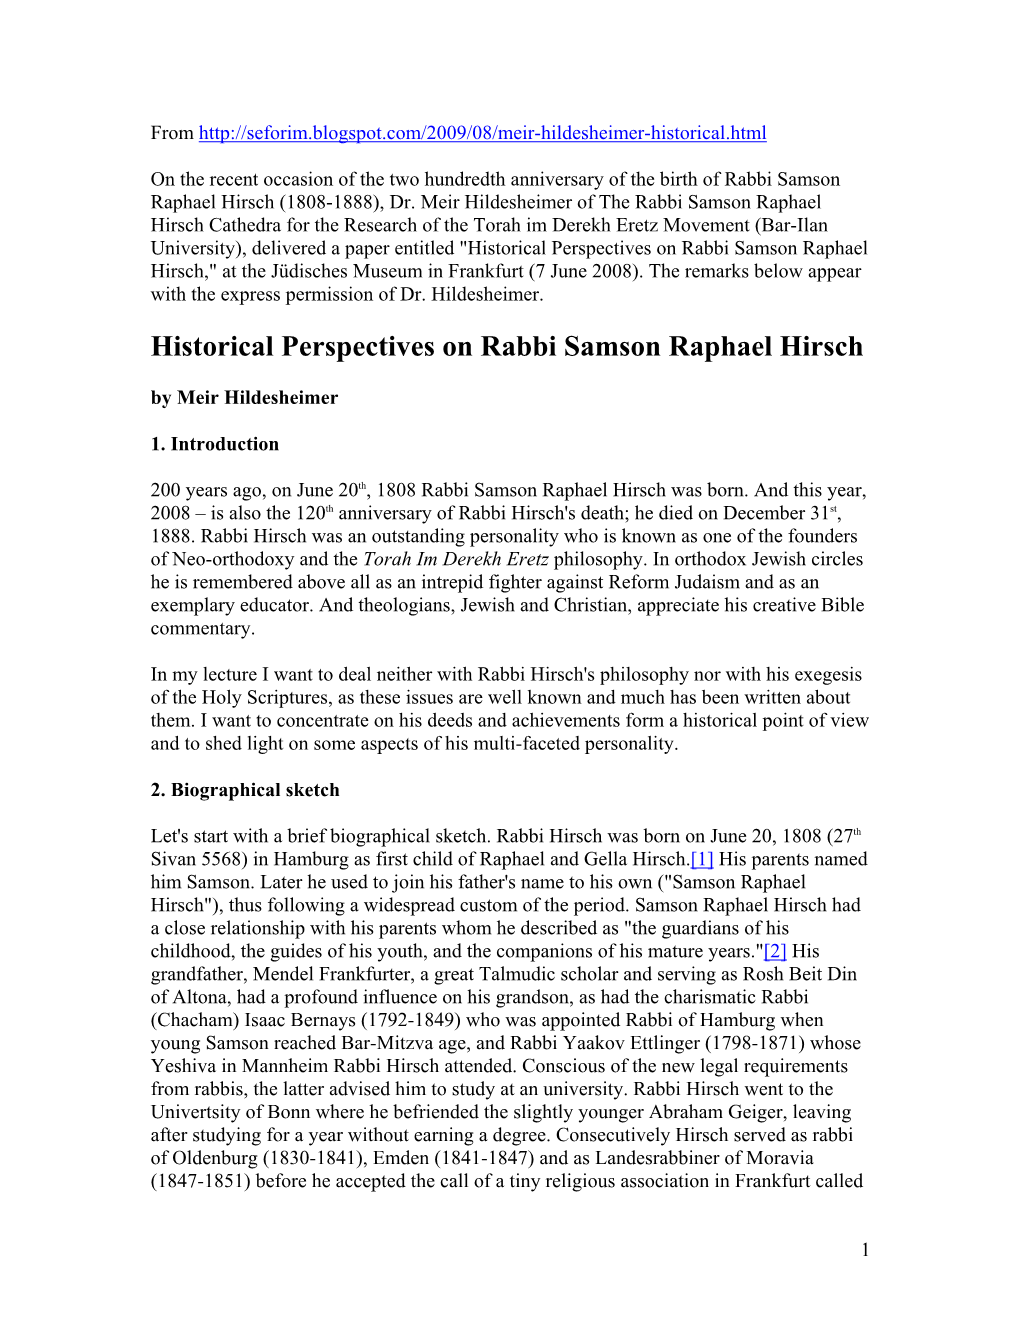 Historical Perspectives on Rabbi Samson Raphael Hirsch," at the Jüdisches Museum in Frankfurt (7 June 2008)